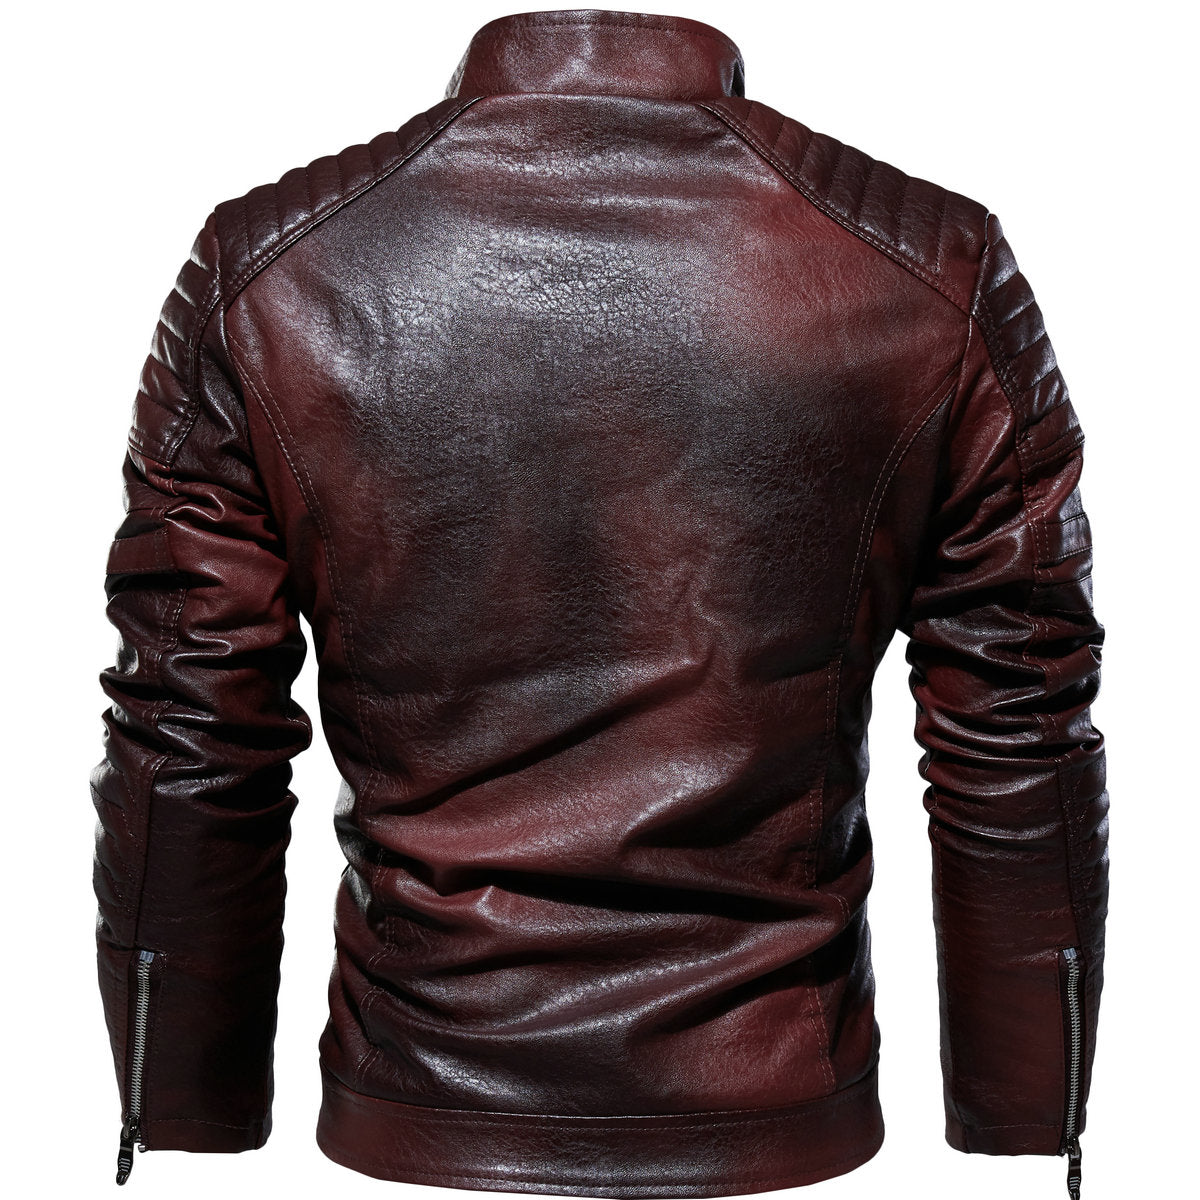 PU Leather Casual Windbreaker Jacket